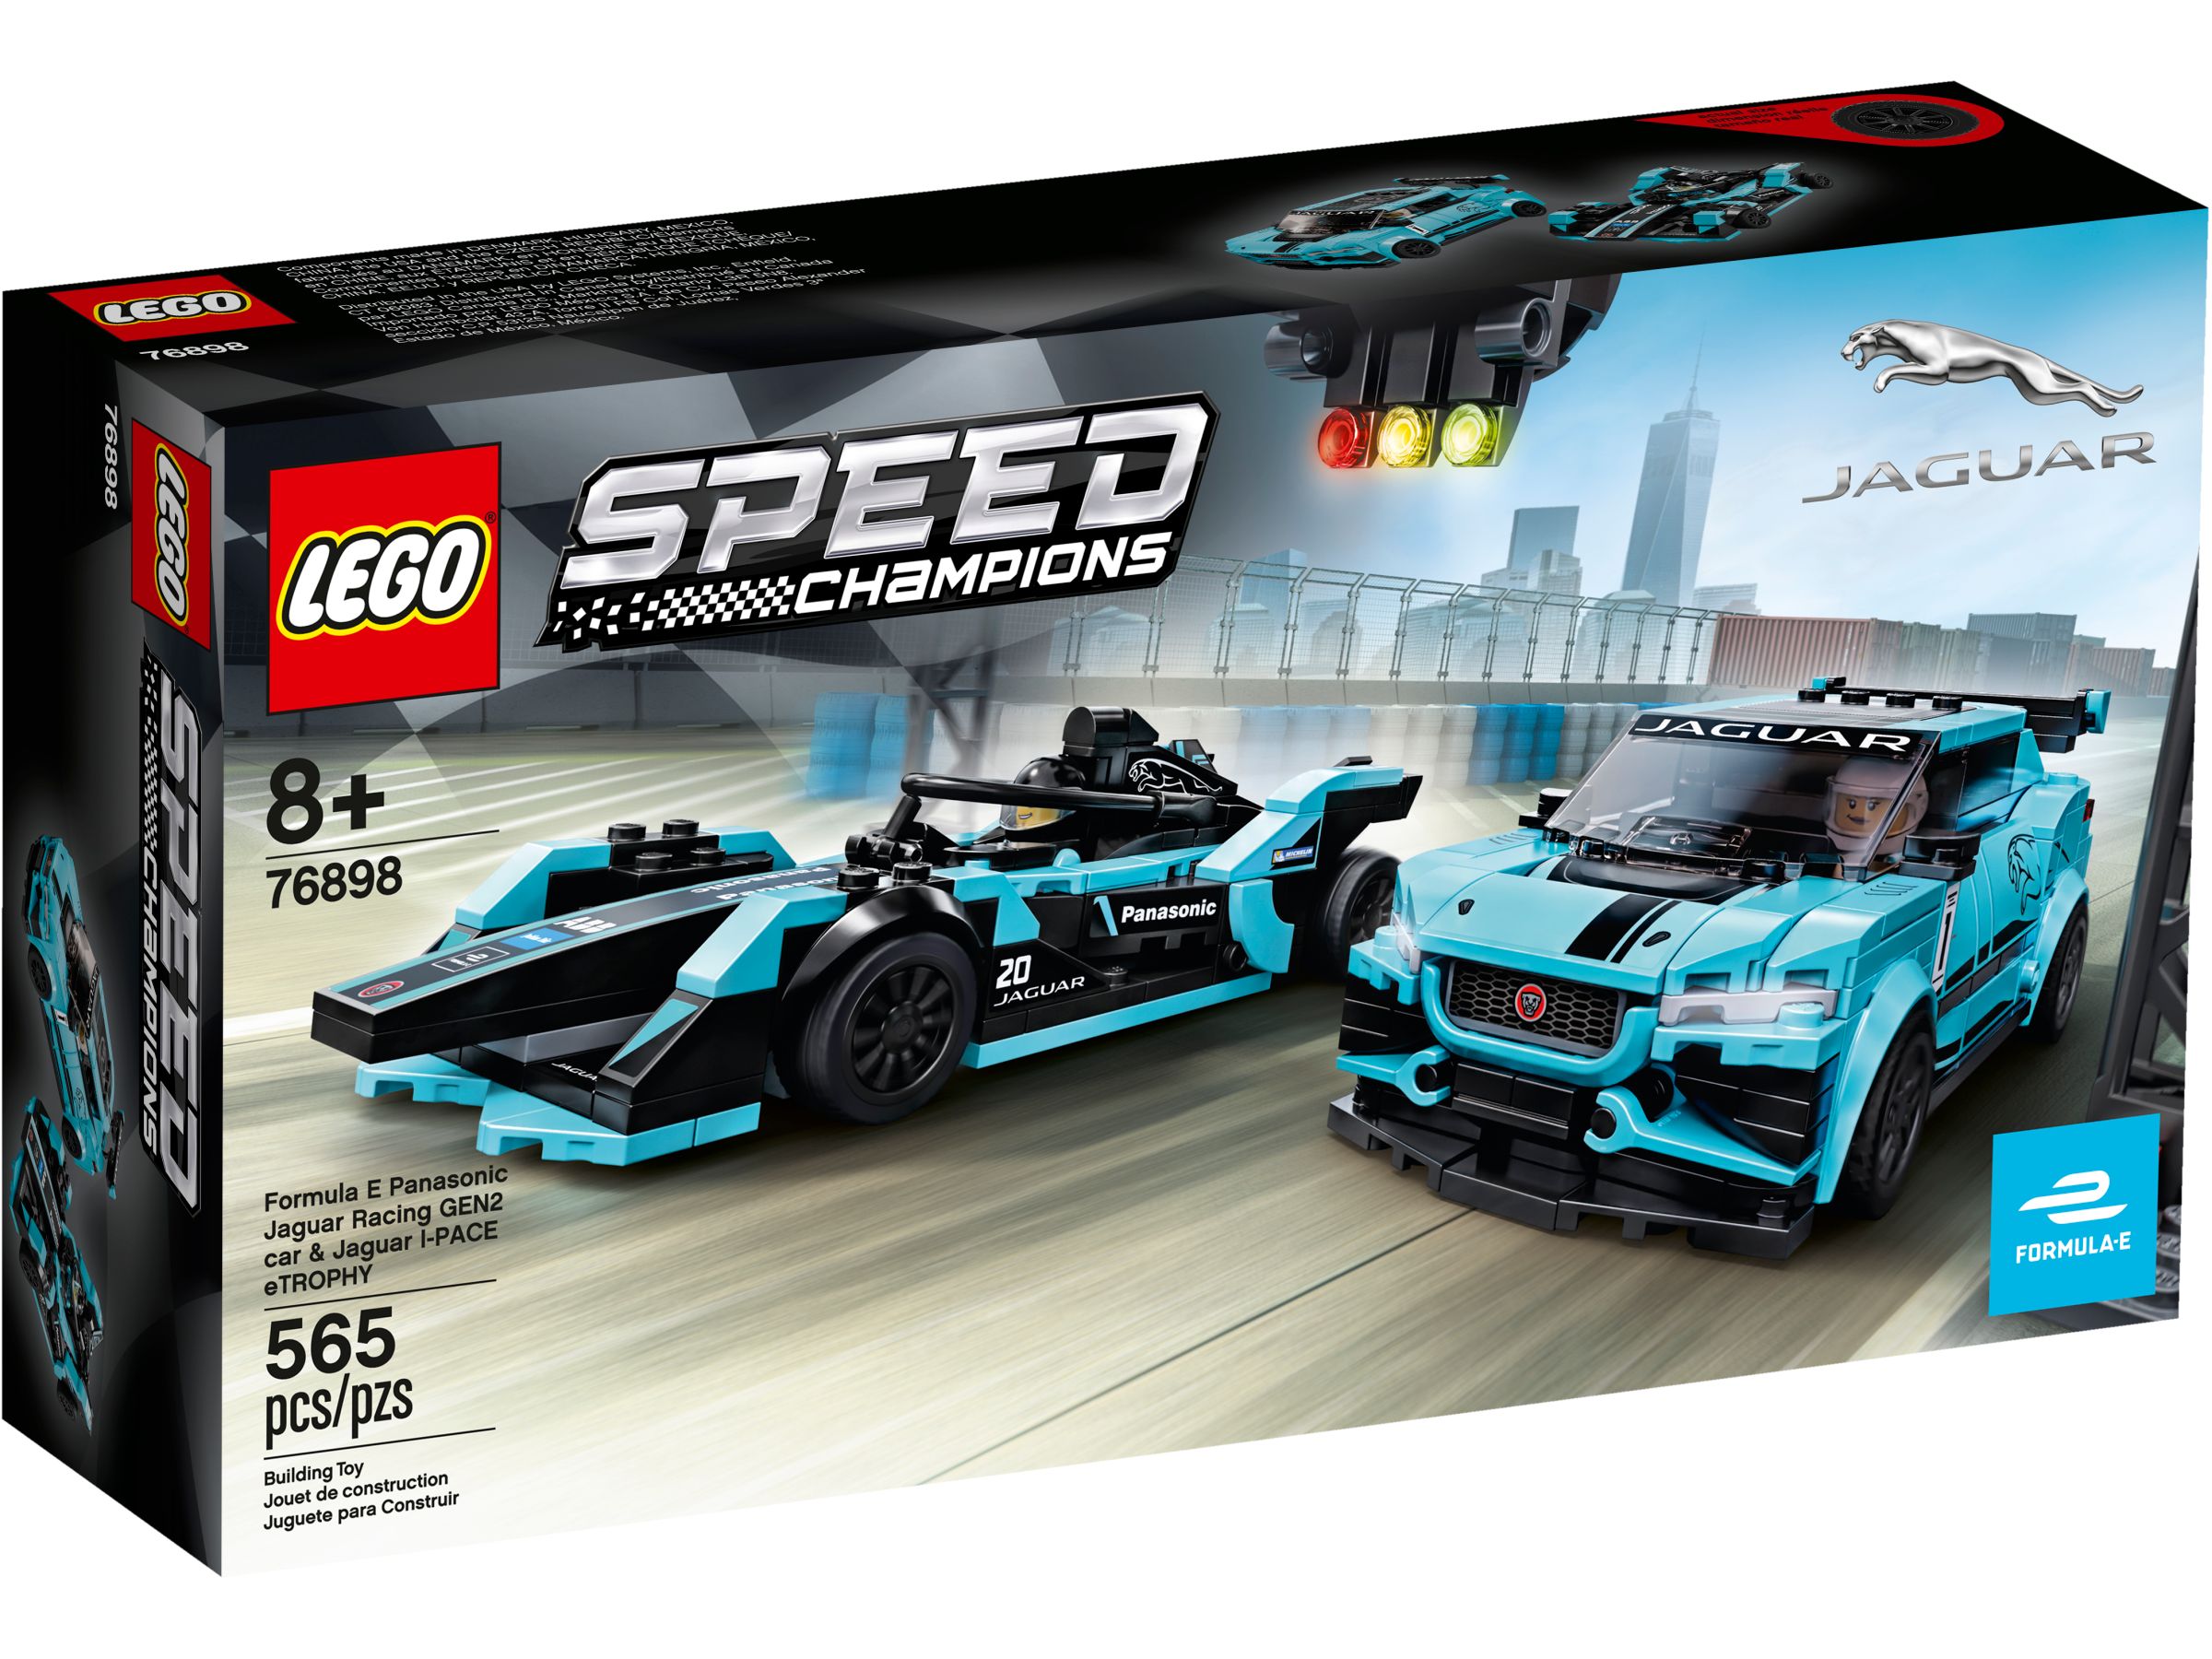 LEGO Speed Champions 76898 Formula E Panasonic Jaguar Racing GEN2 car & Jaguar I-PACE eTROPHY LEGO_76898_alt1.jpg